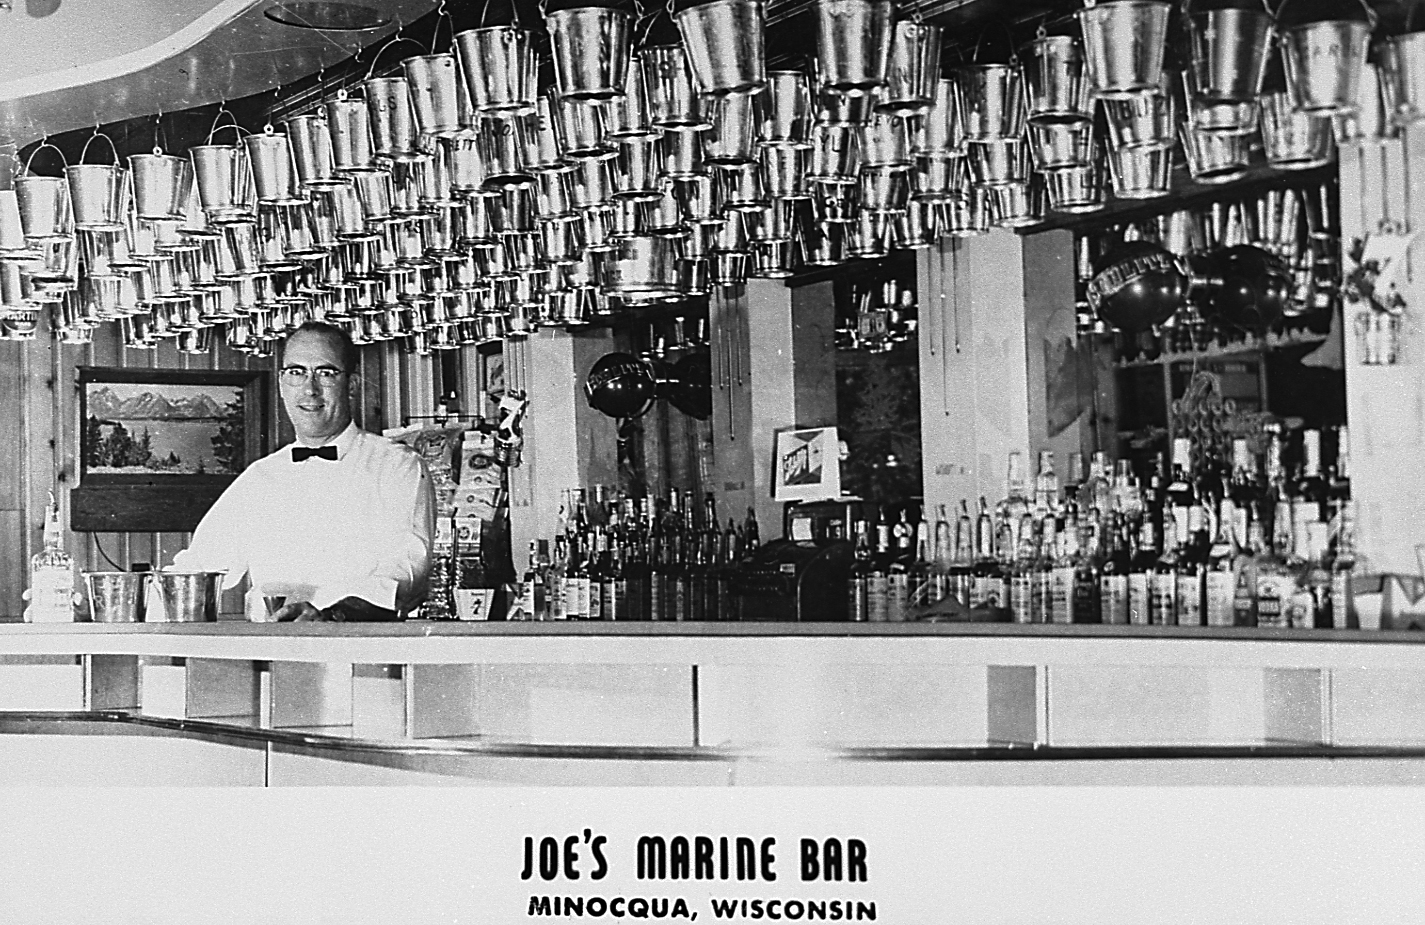 Joe's Marine Bar on Lake Minocqua in the 1950s.